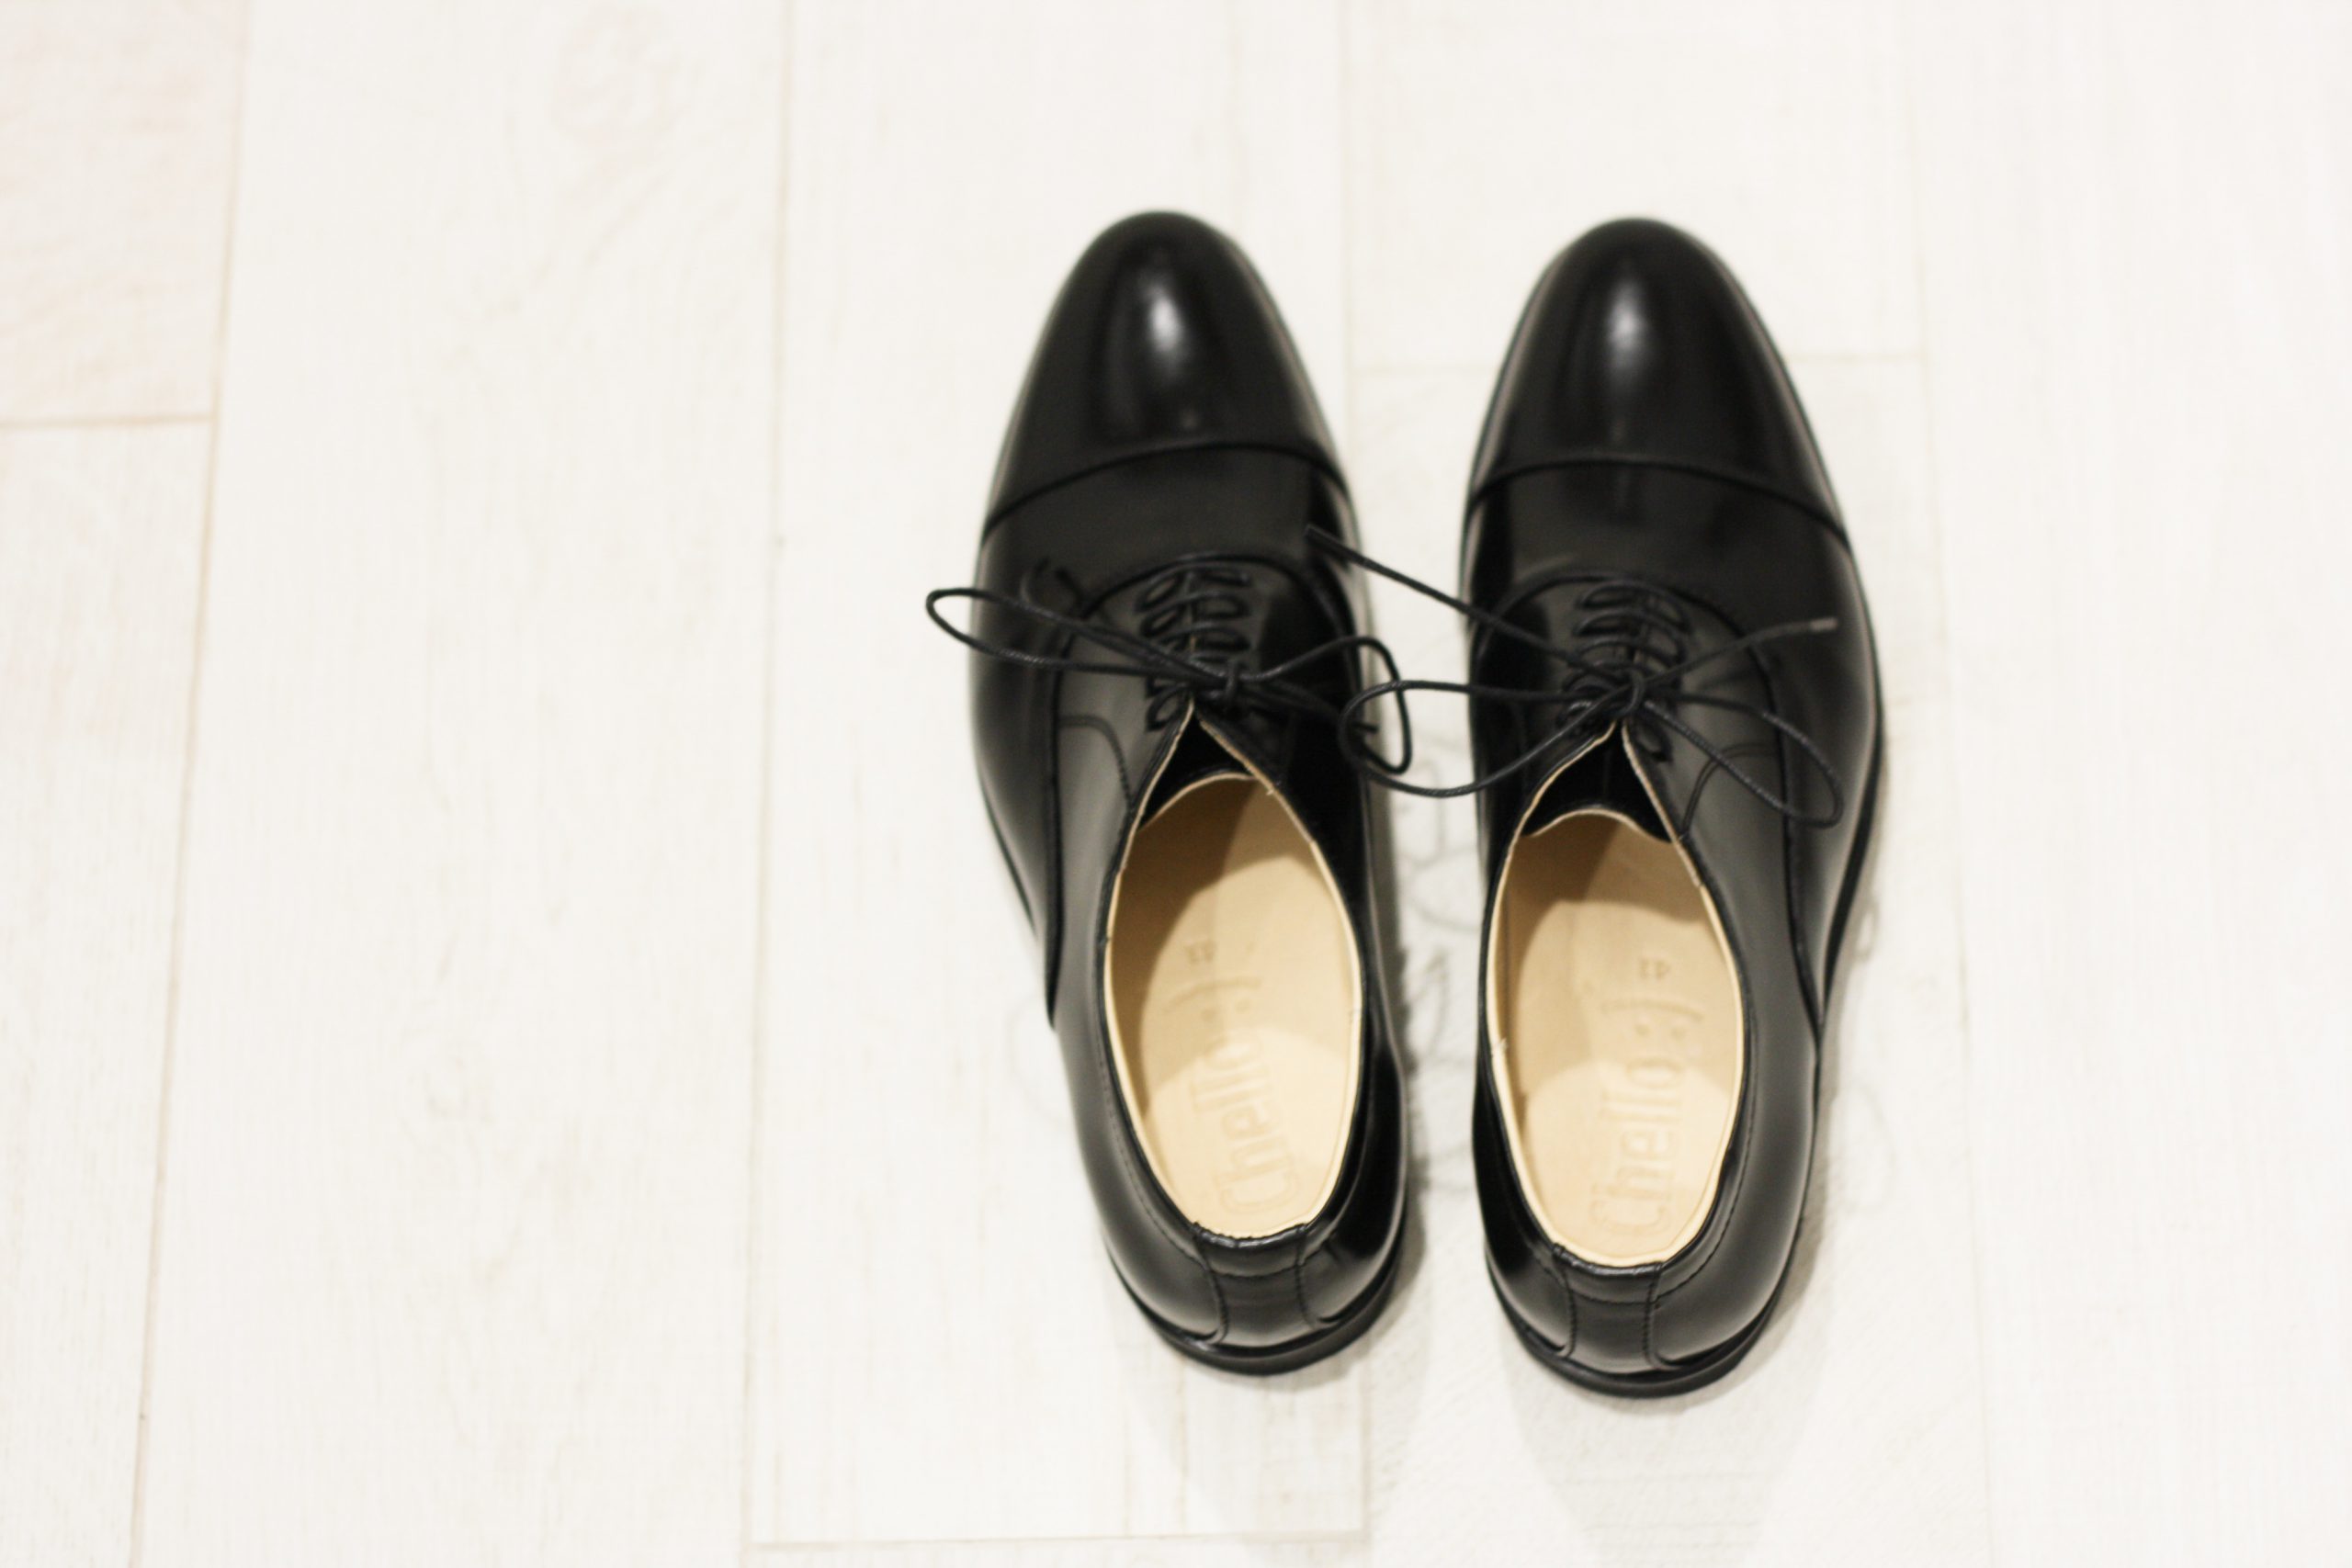 SLU049-1-1 Cap-Toe Oxford Shoes (Pilot Type) - Classic Genuine Leather ...